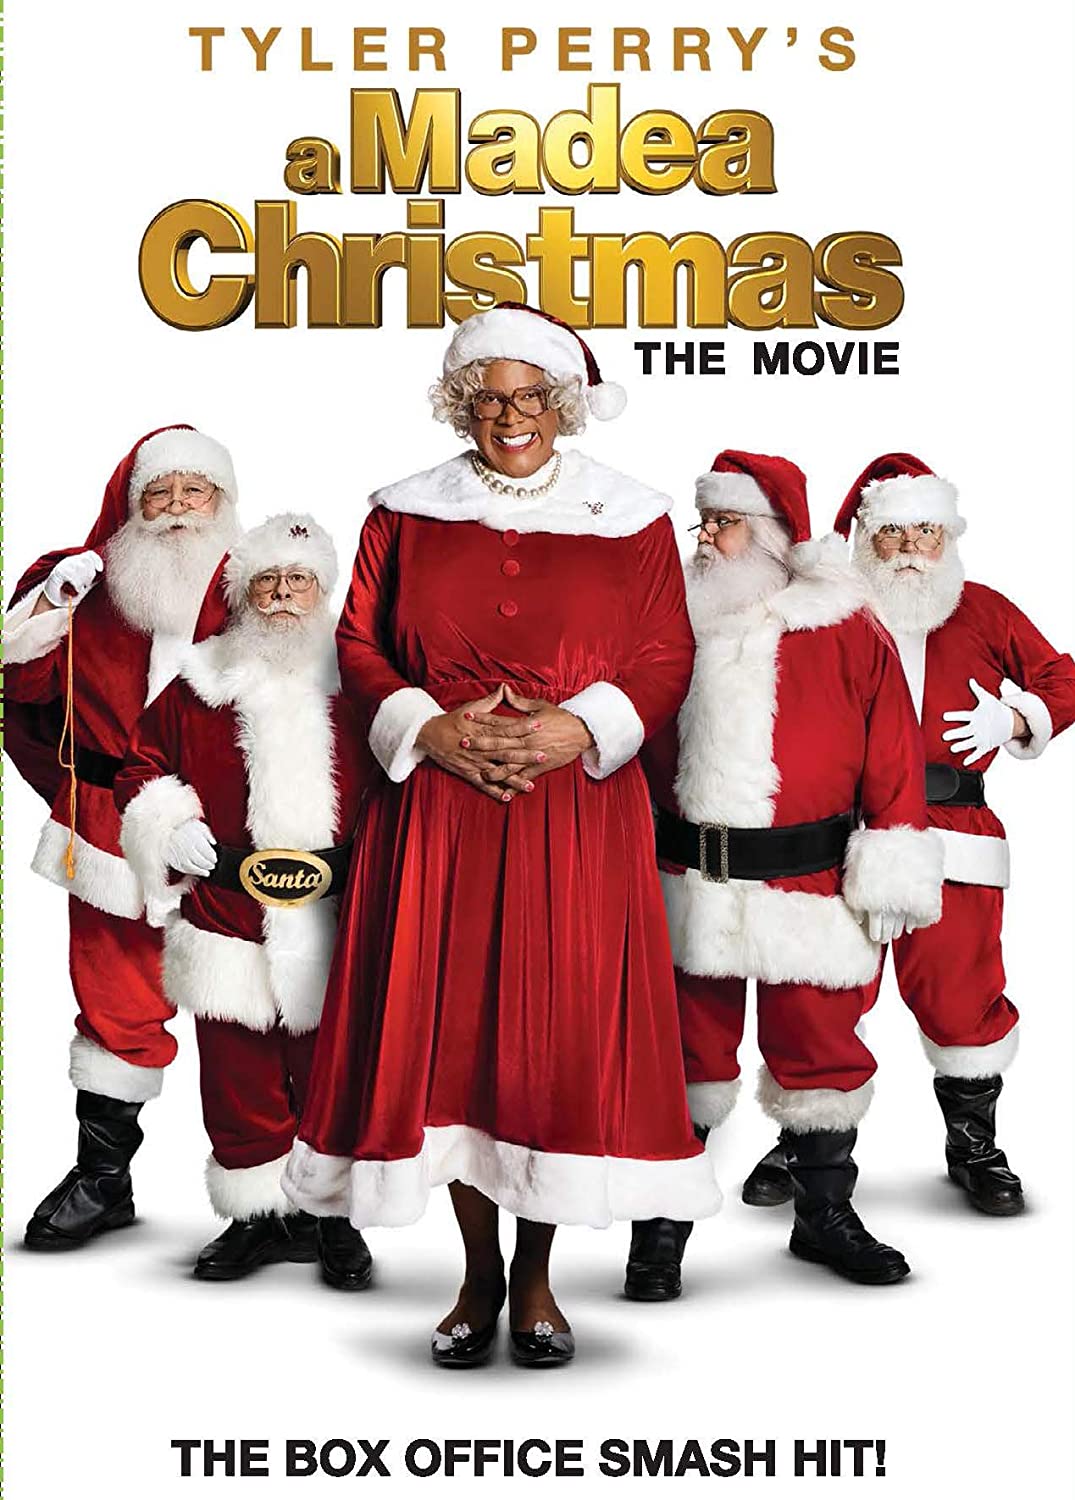 Tyler Perry's A Madea Christmas (DVD + Digital Copy) - DVD [ 2014 ]  - Comedy Movies On DVD - Movies On GRUV